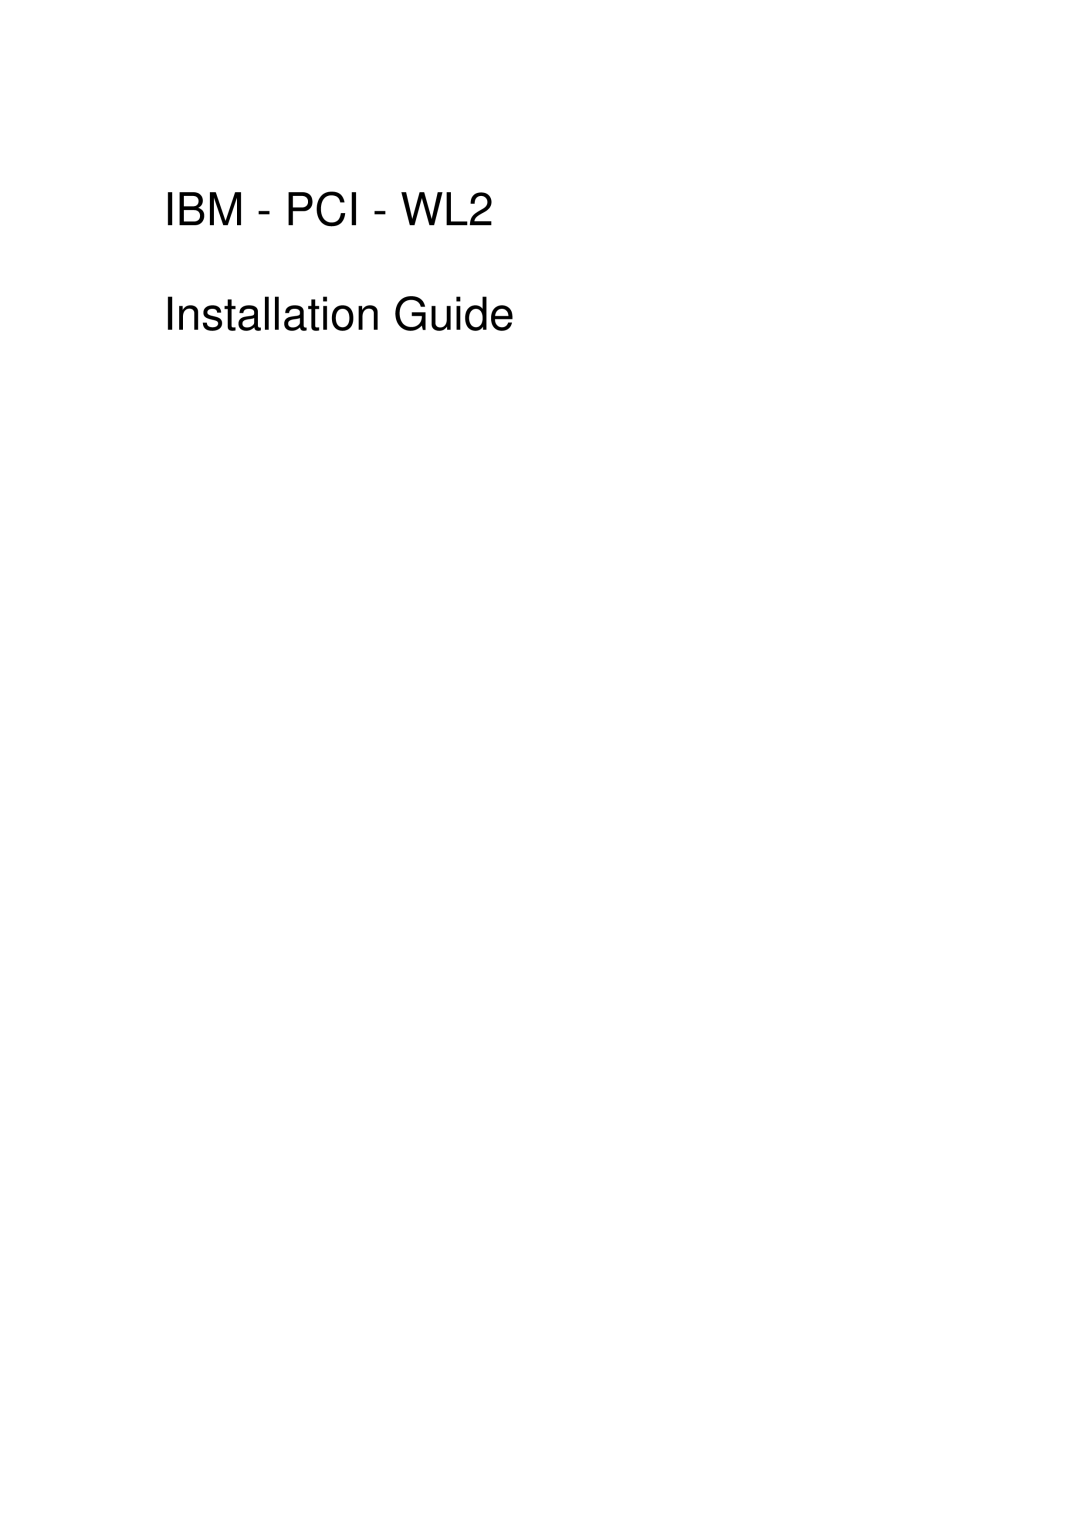 IBM manual IBM - PCI - WL2 Installation Guide 